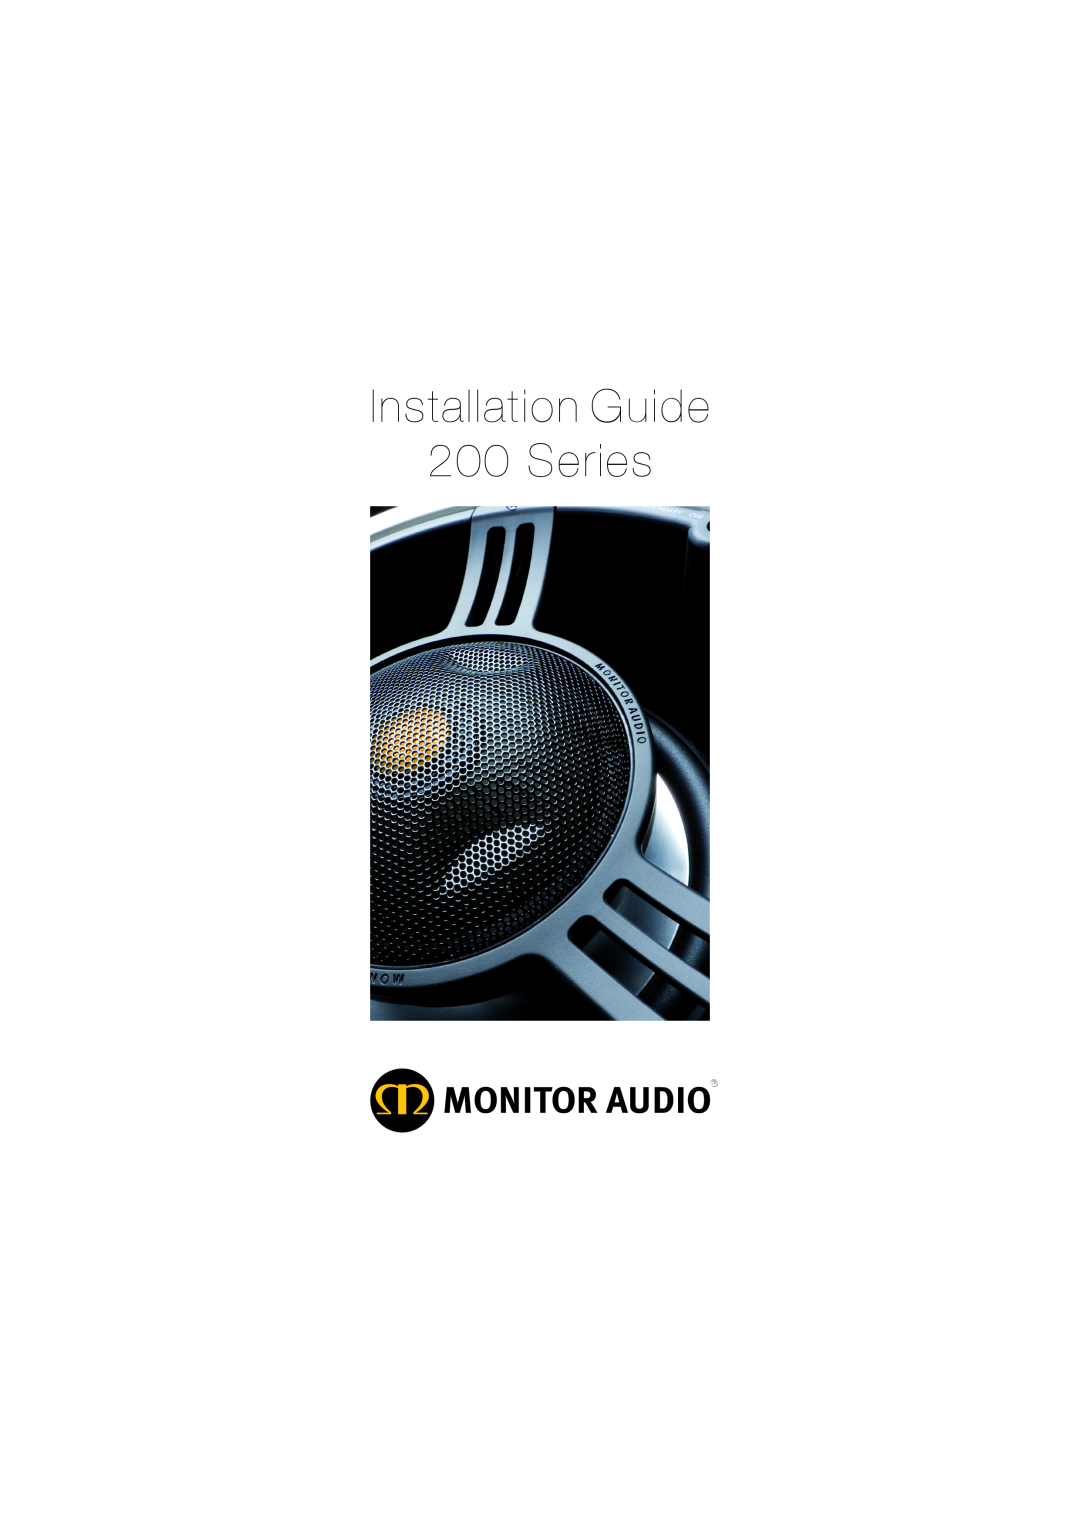 Monitor Audio manual Installation Guide 200 Series 